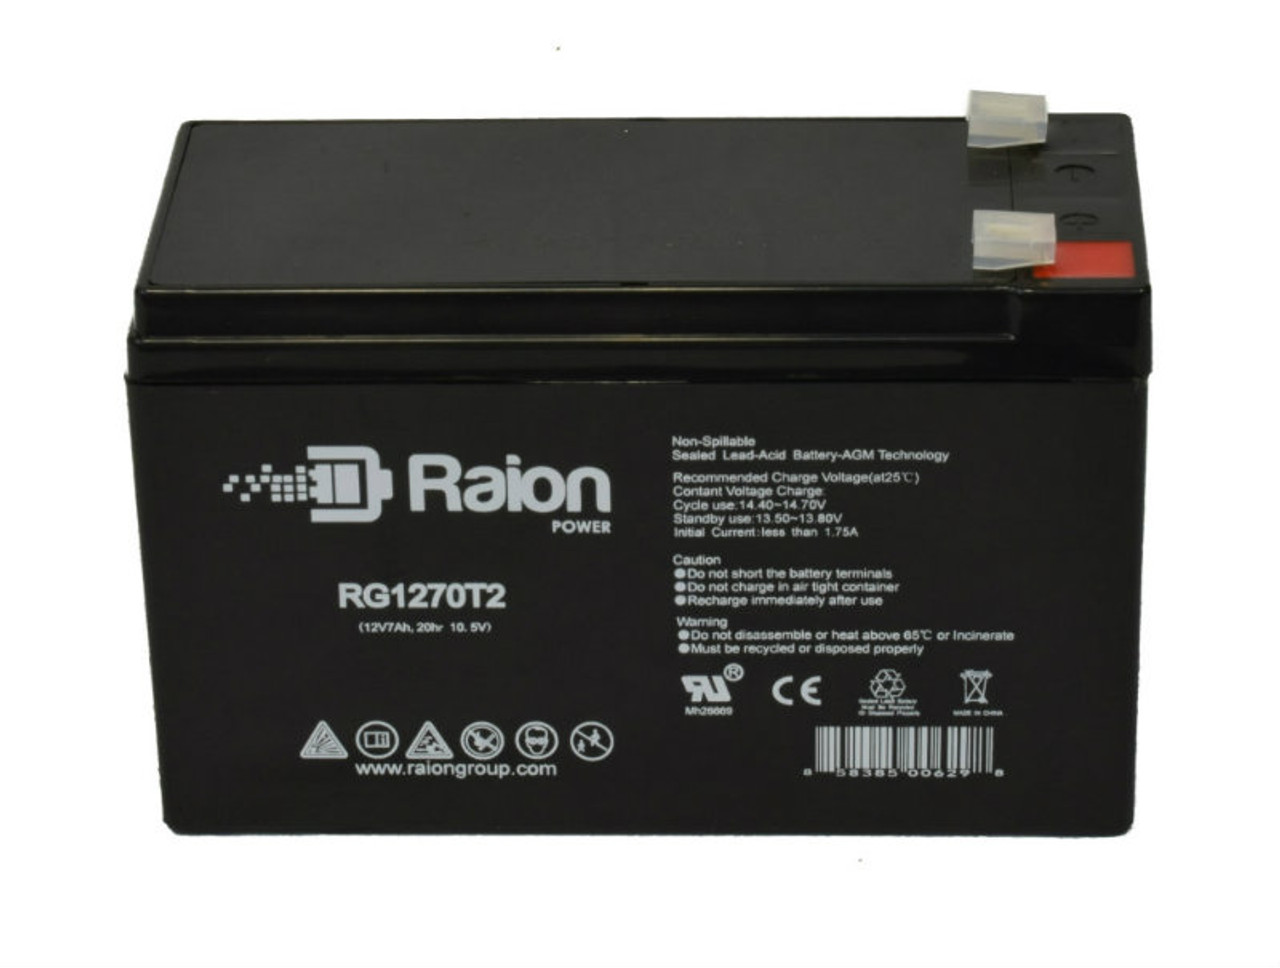 Raion Power RG1270T1 12V 7Ah Lead Acid Battery for Sureway SW-1020-F1